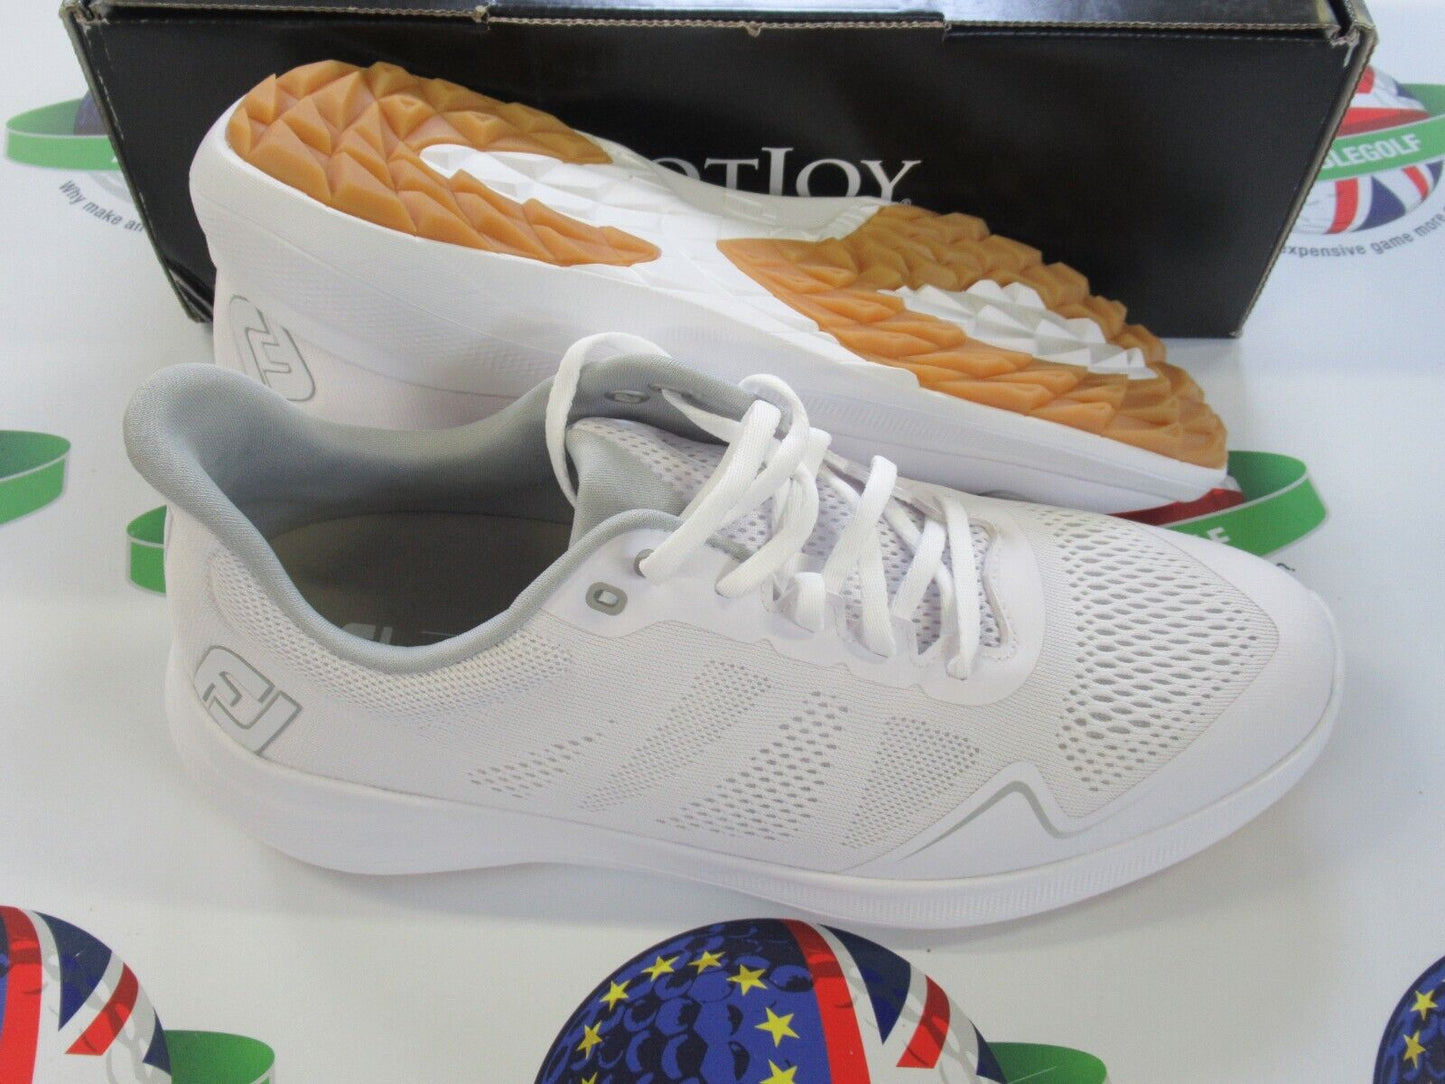 footjoy flex golf shoes 56139k white uk size 9 medium